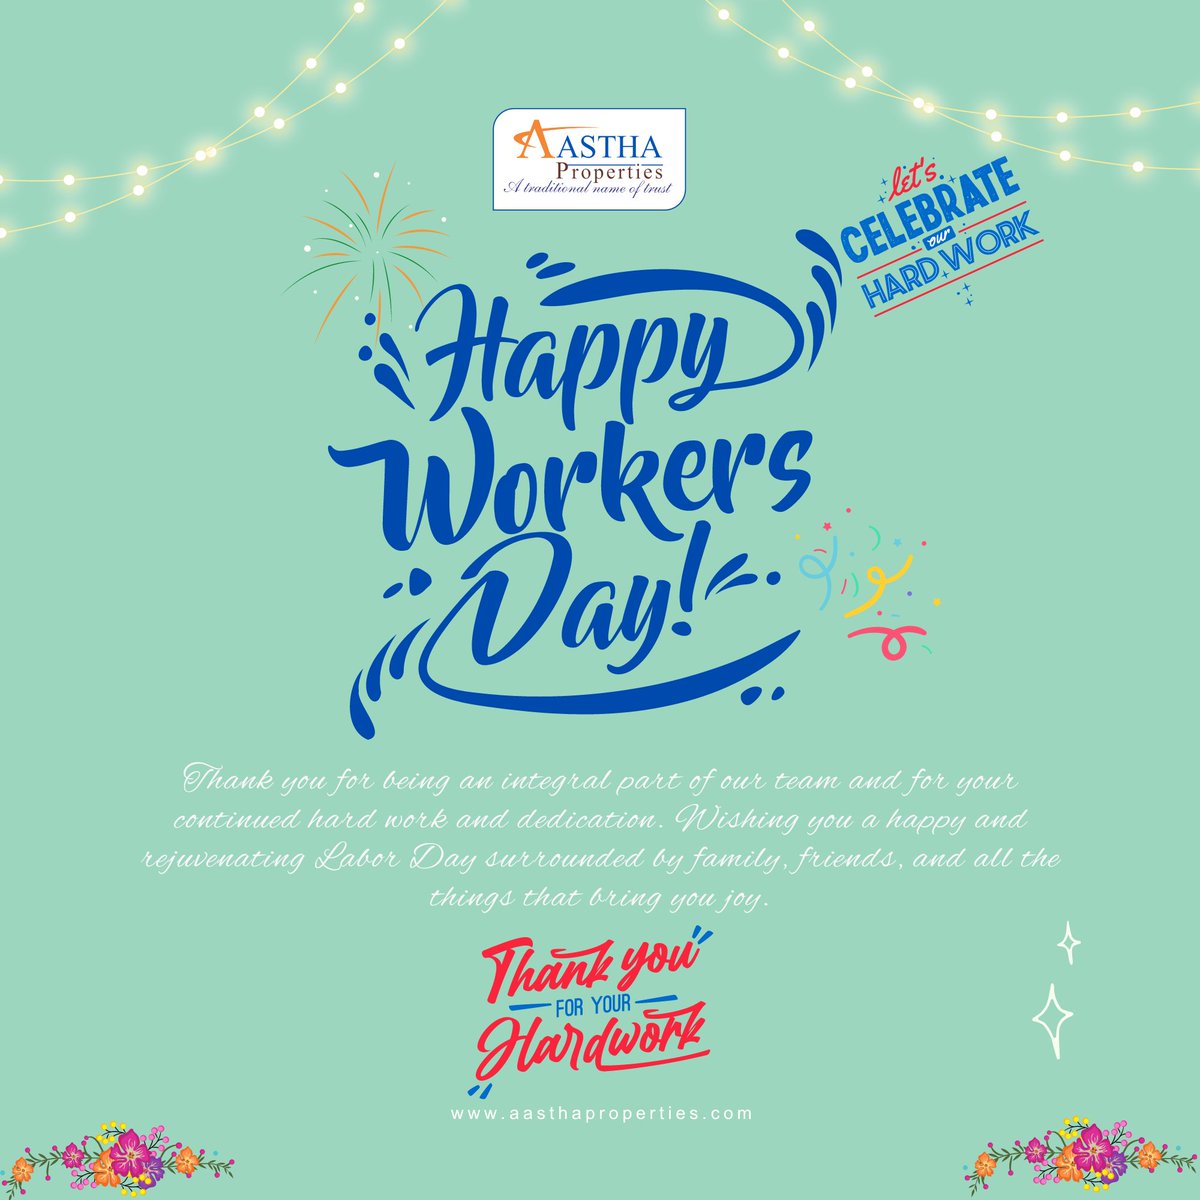 Happy Workers Day 
#AasthaProperties #buyplots #siteforsale #mysoreroad #airportroad #Devanahalli #doddaballapura #chikkaballapura